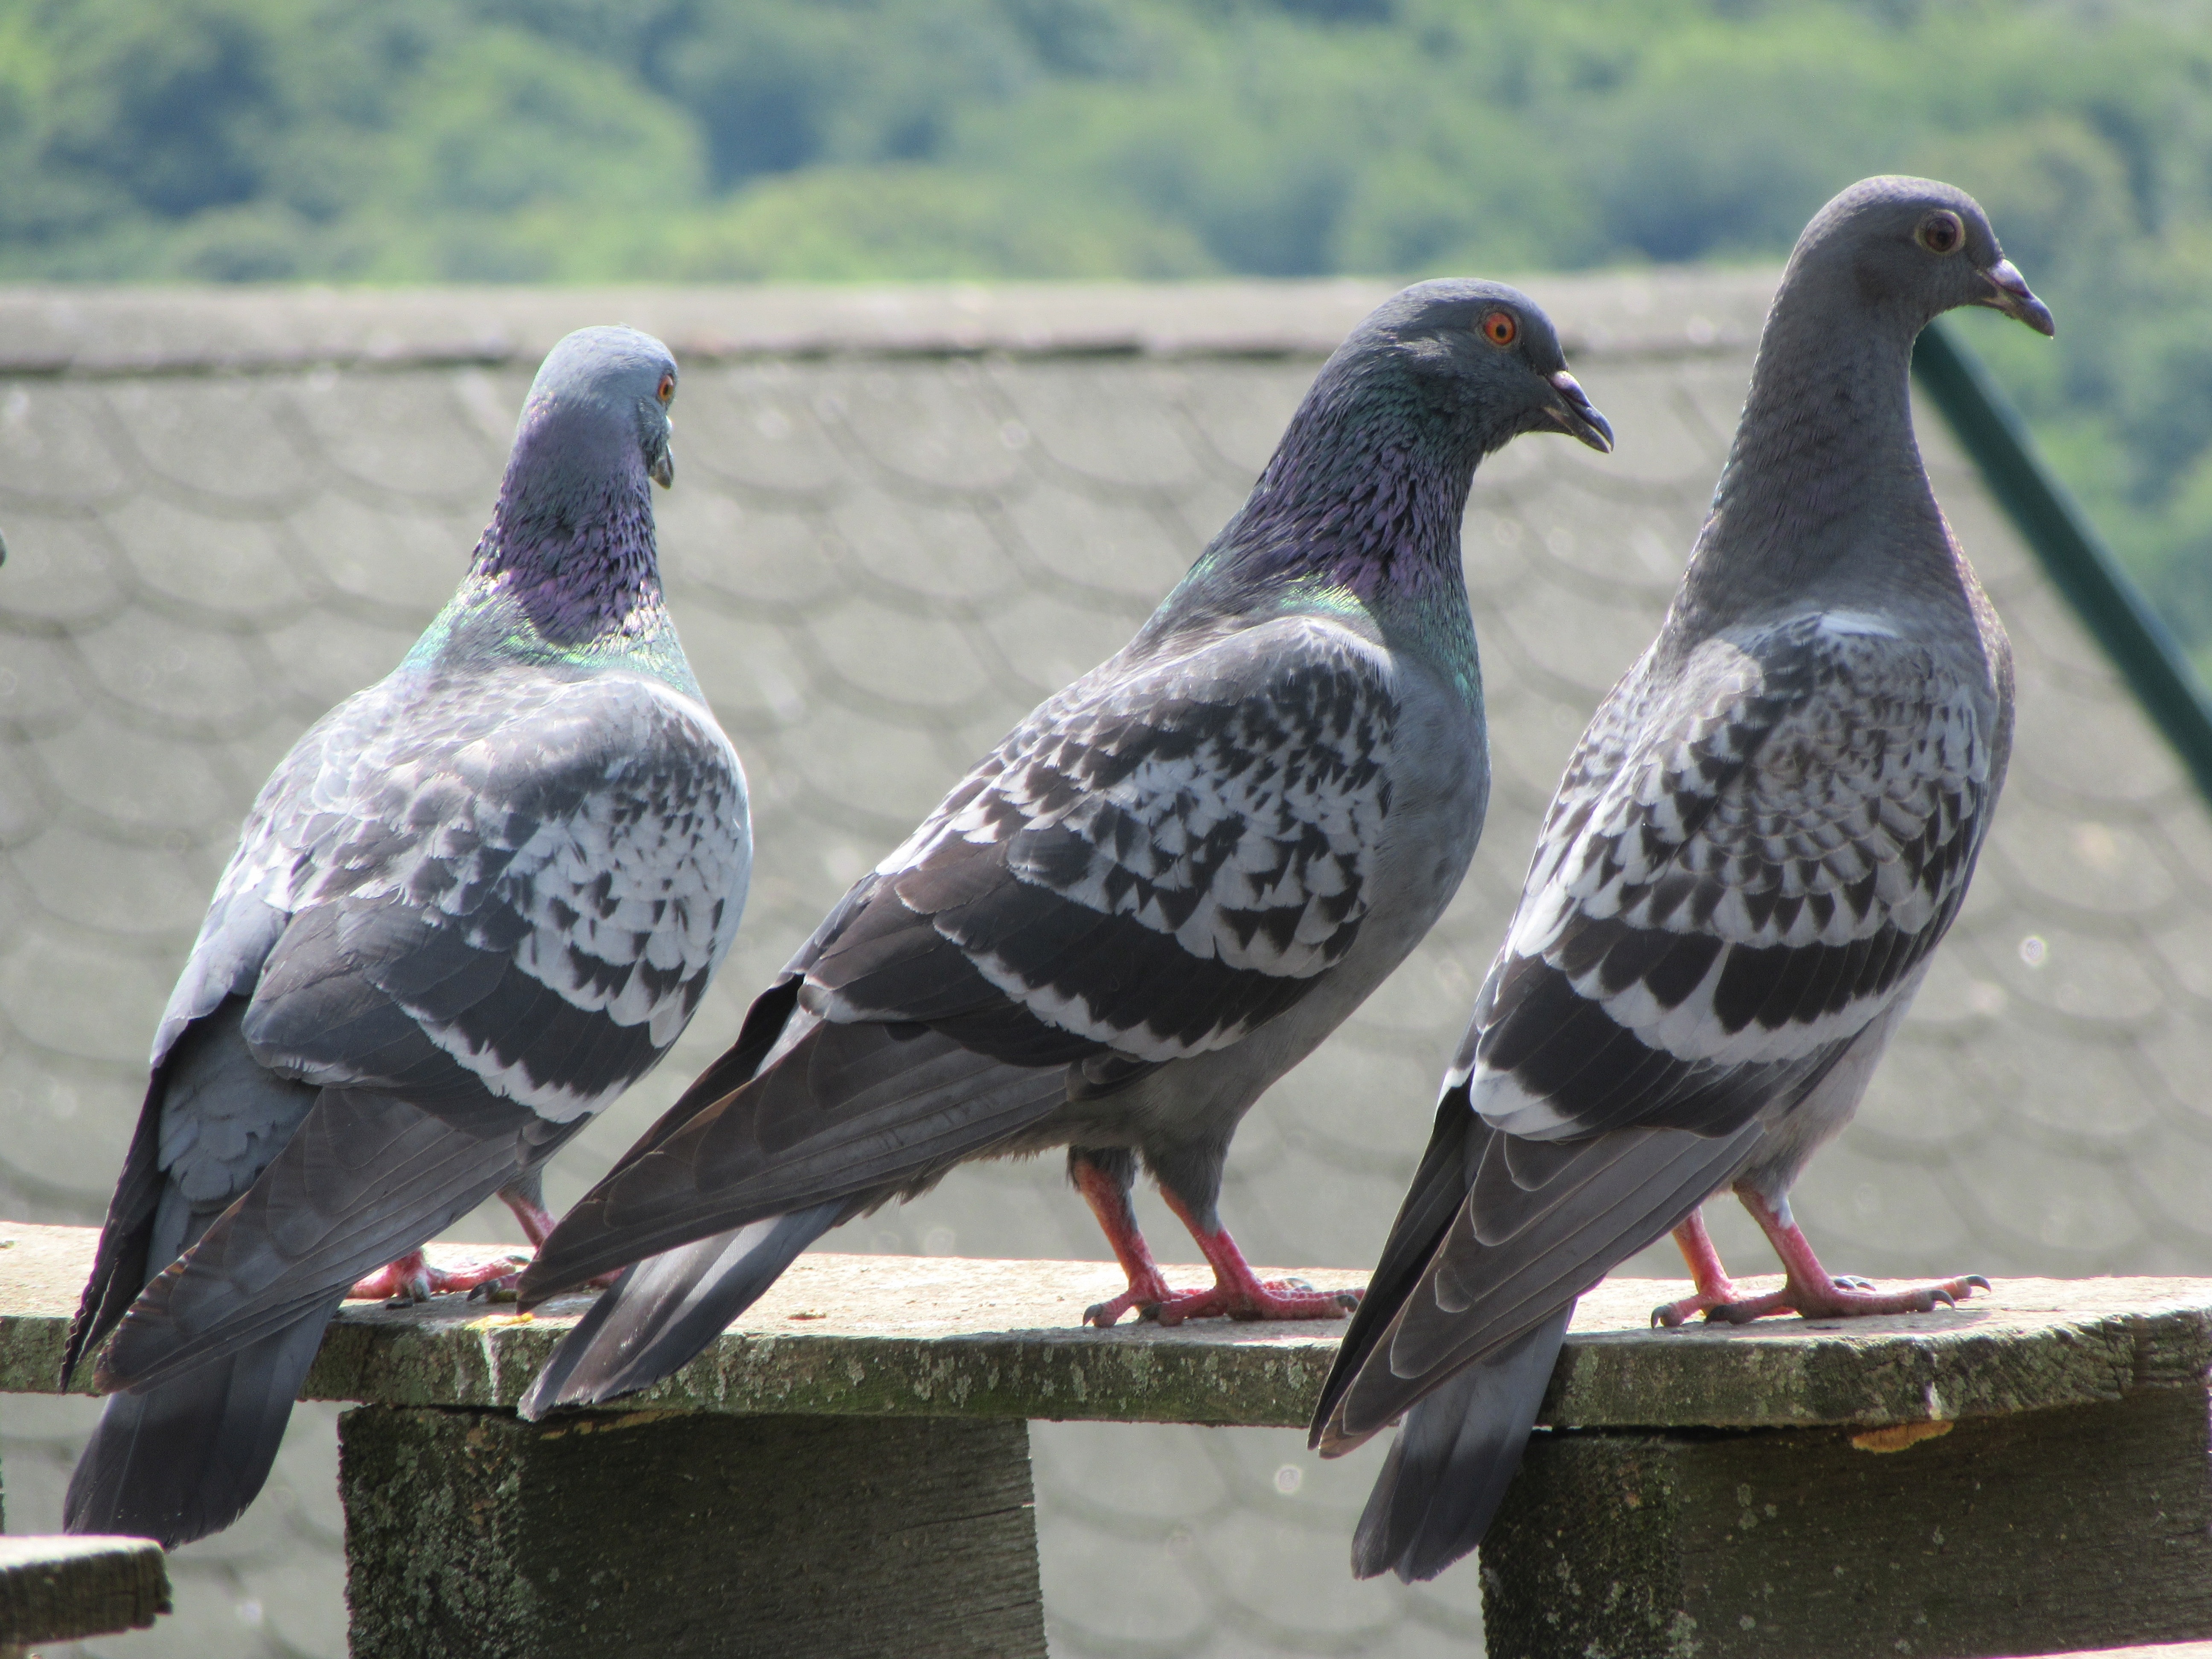 three gray pigeons